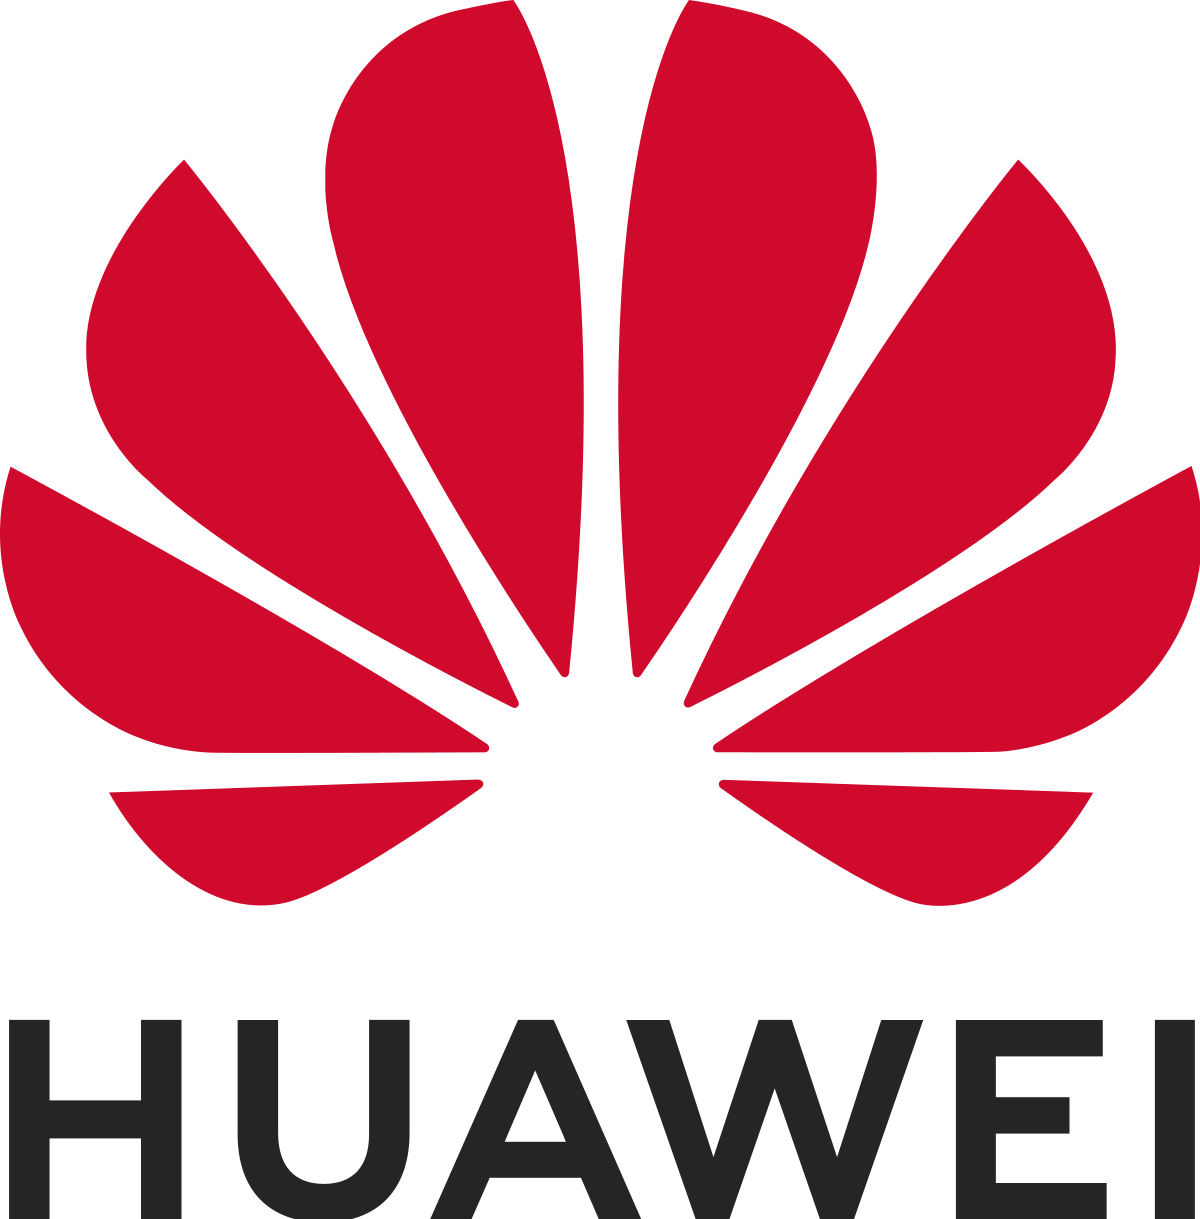 Waterloo-Huawei Joint Innovation Lab's logo